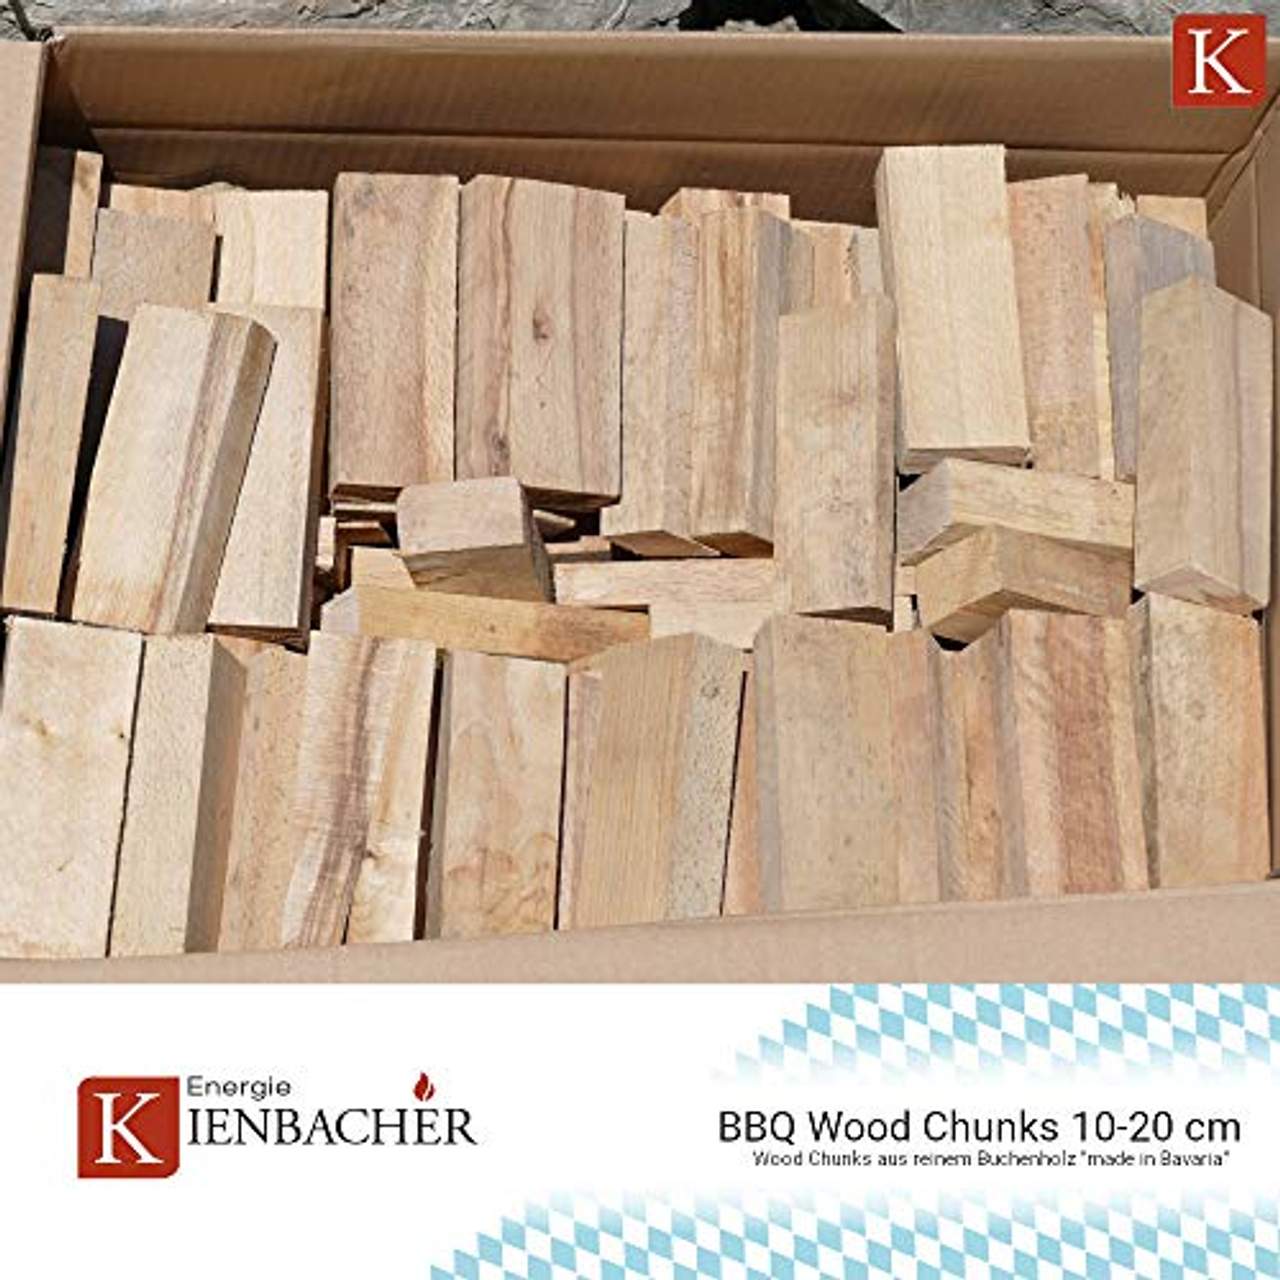 Energie Kienbacher 5-30 kg BBQ Buche sortenrein Wood Chunks Smoker Holz Räucherholz